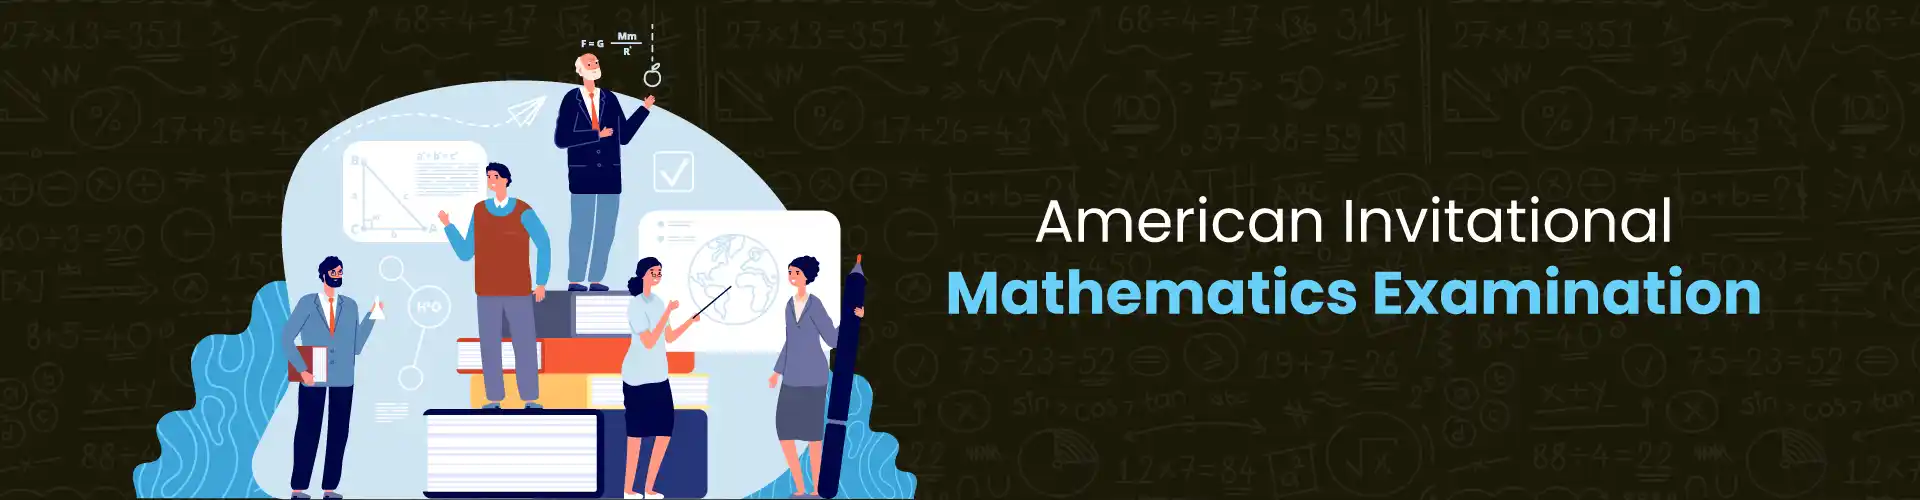 American Invitational Mathematics Examination